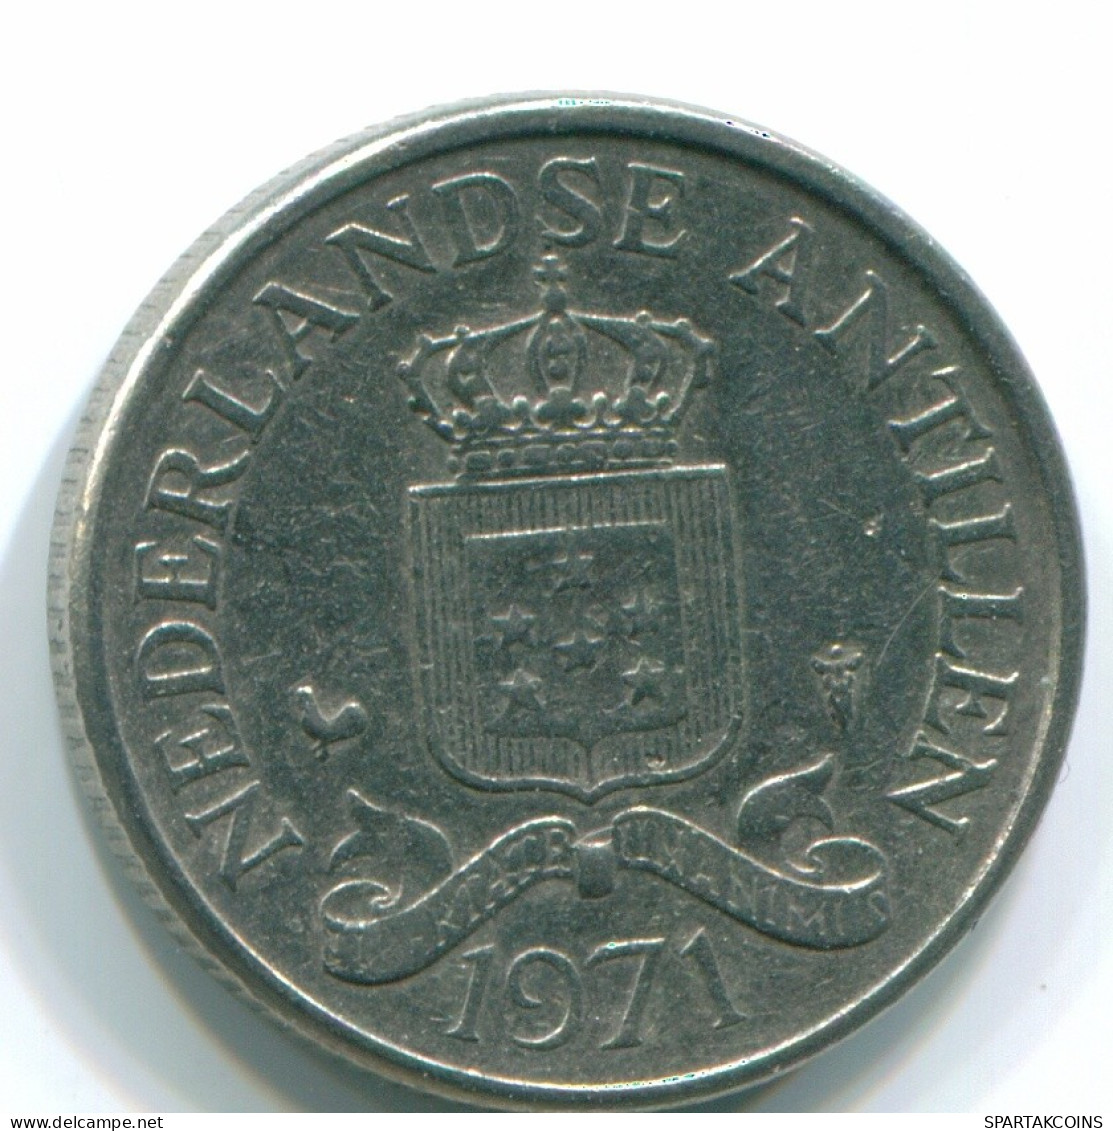 25 CENTS 1971 NIEDERLÄNDISCHE ANTILLEN Nickel Koloniale Münze #S11565.D.A - Netherlands Antilles